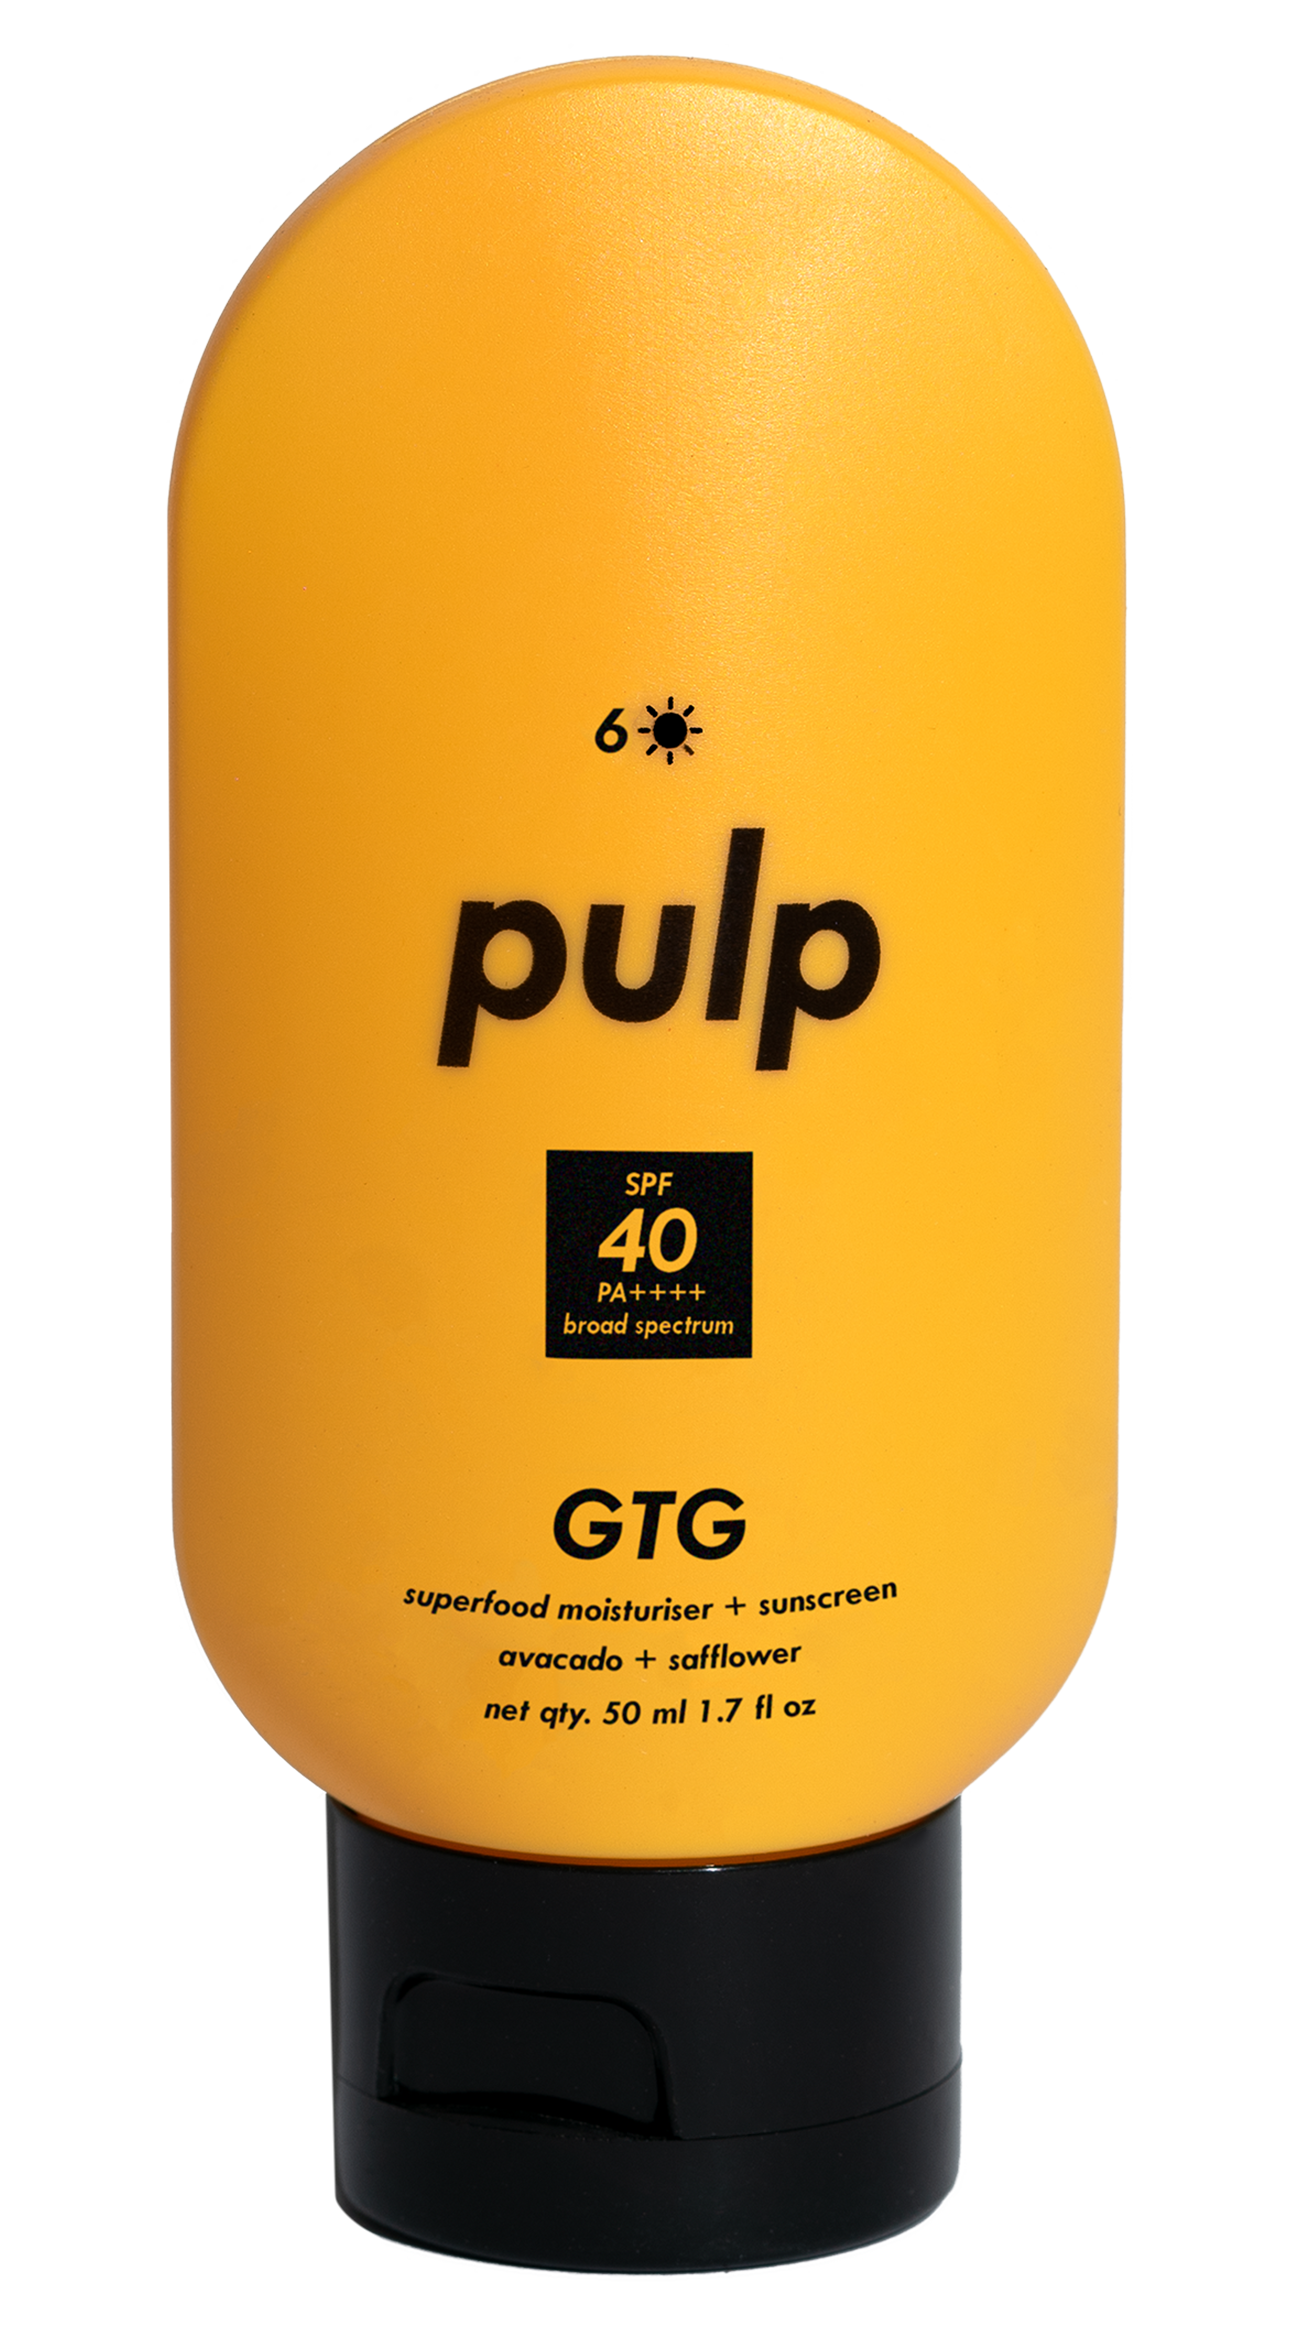 Pulp GTG Daily Moisturizer + Sunscreen 40 SPF | 50ml